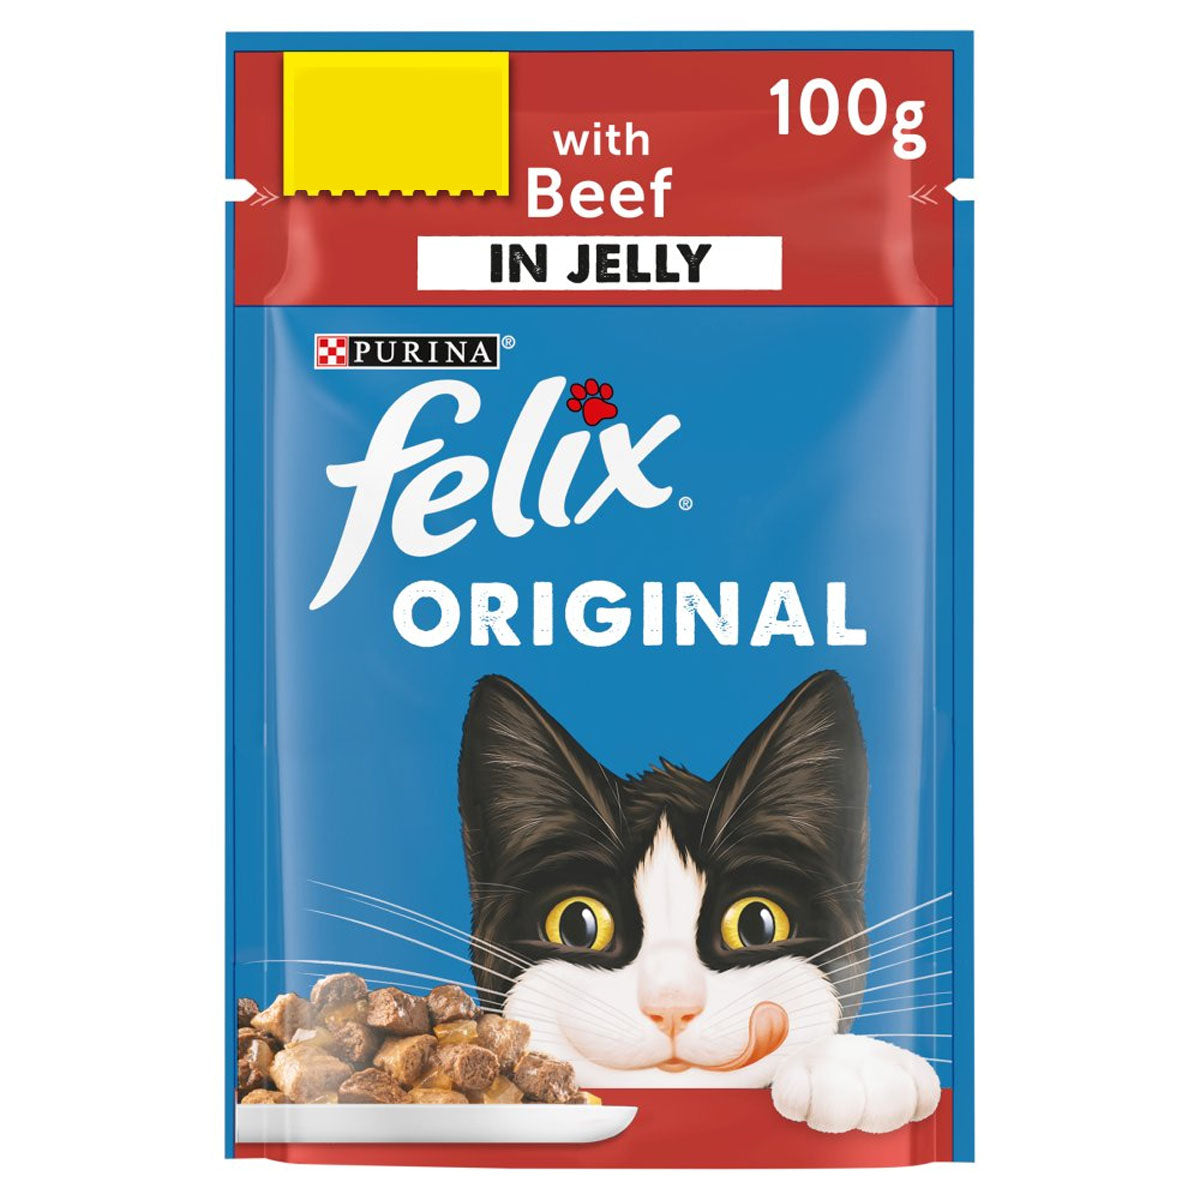 Felix - Original with Beef in Jelly - 100g cat food.